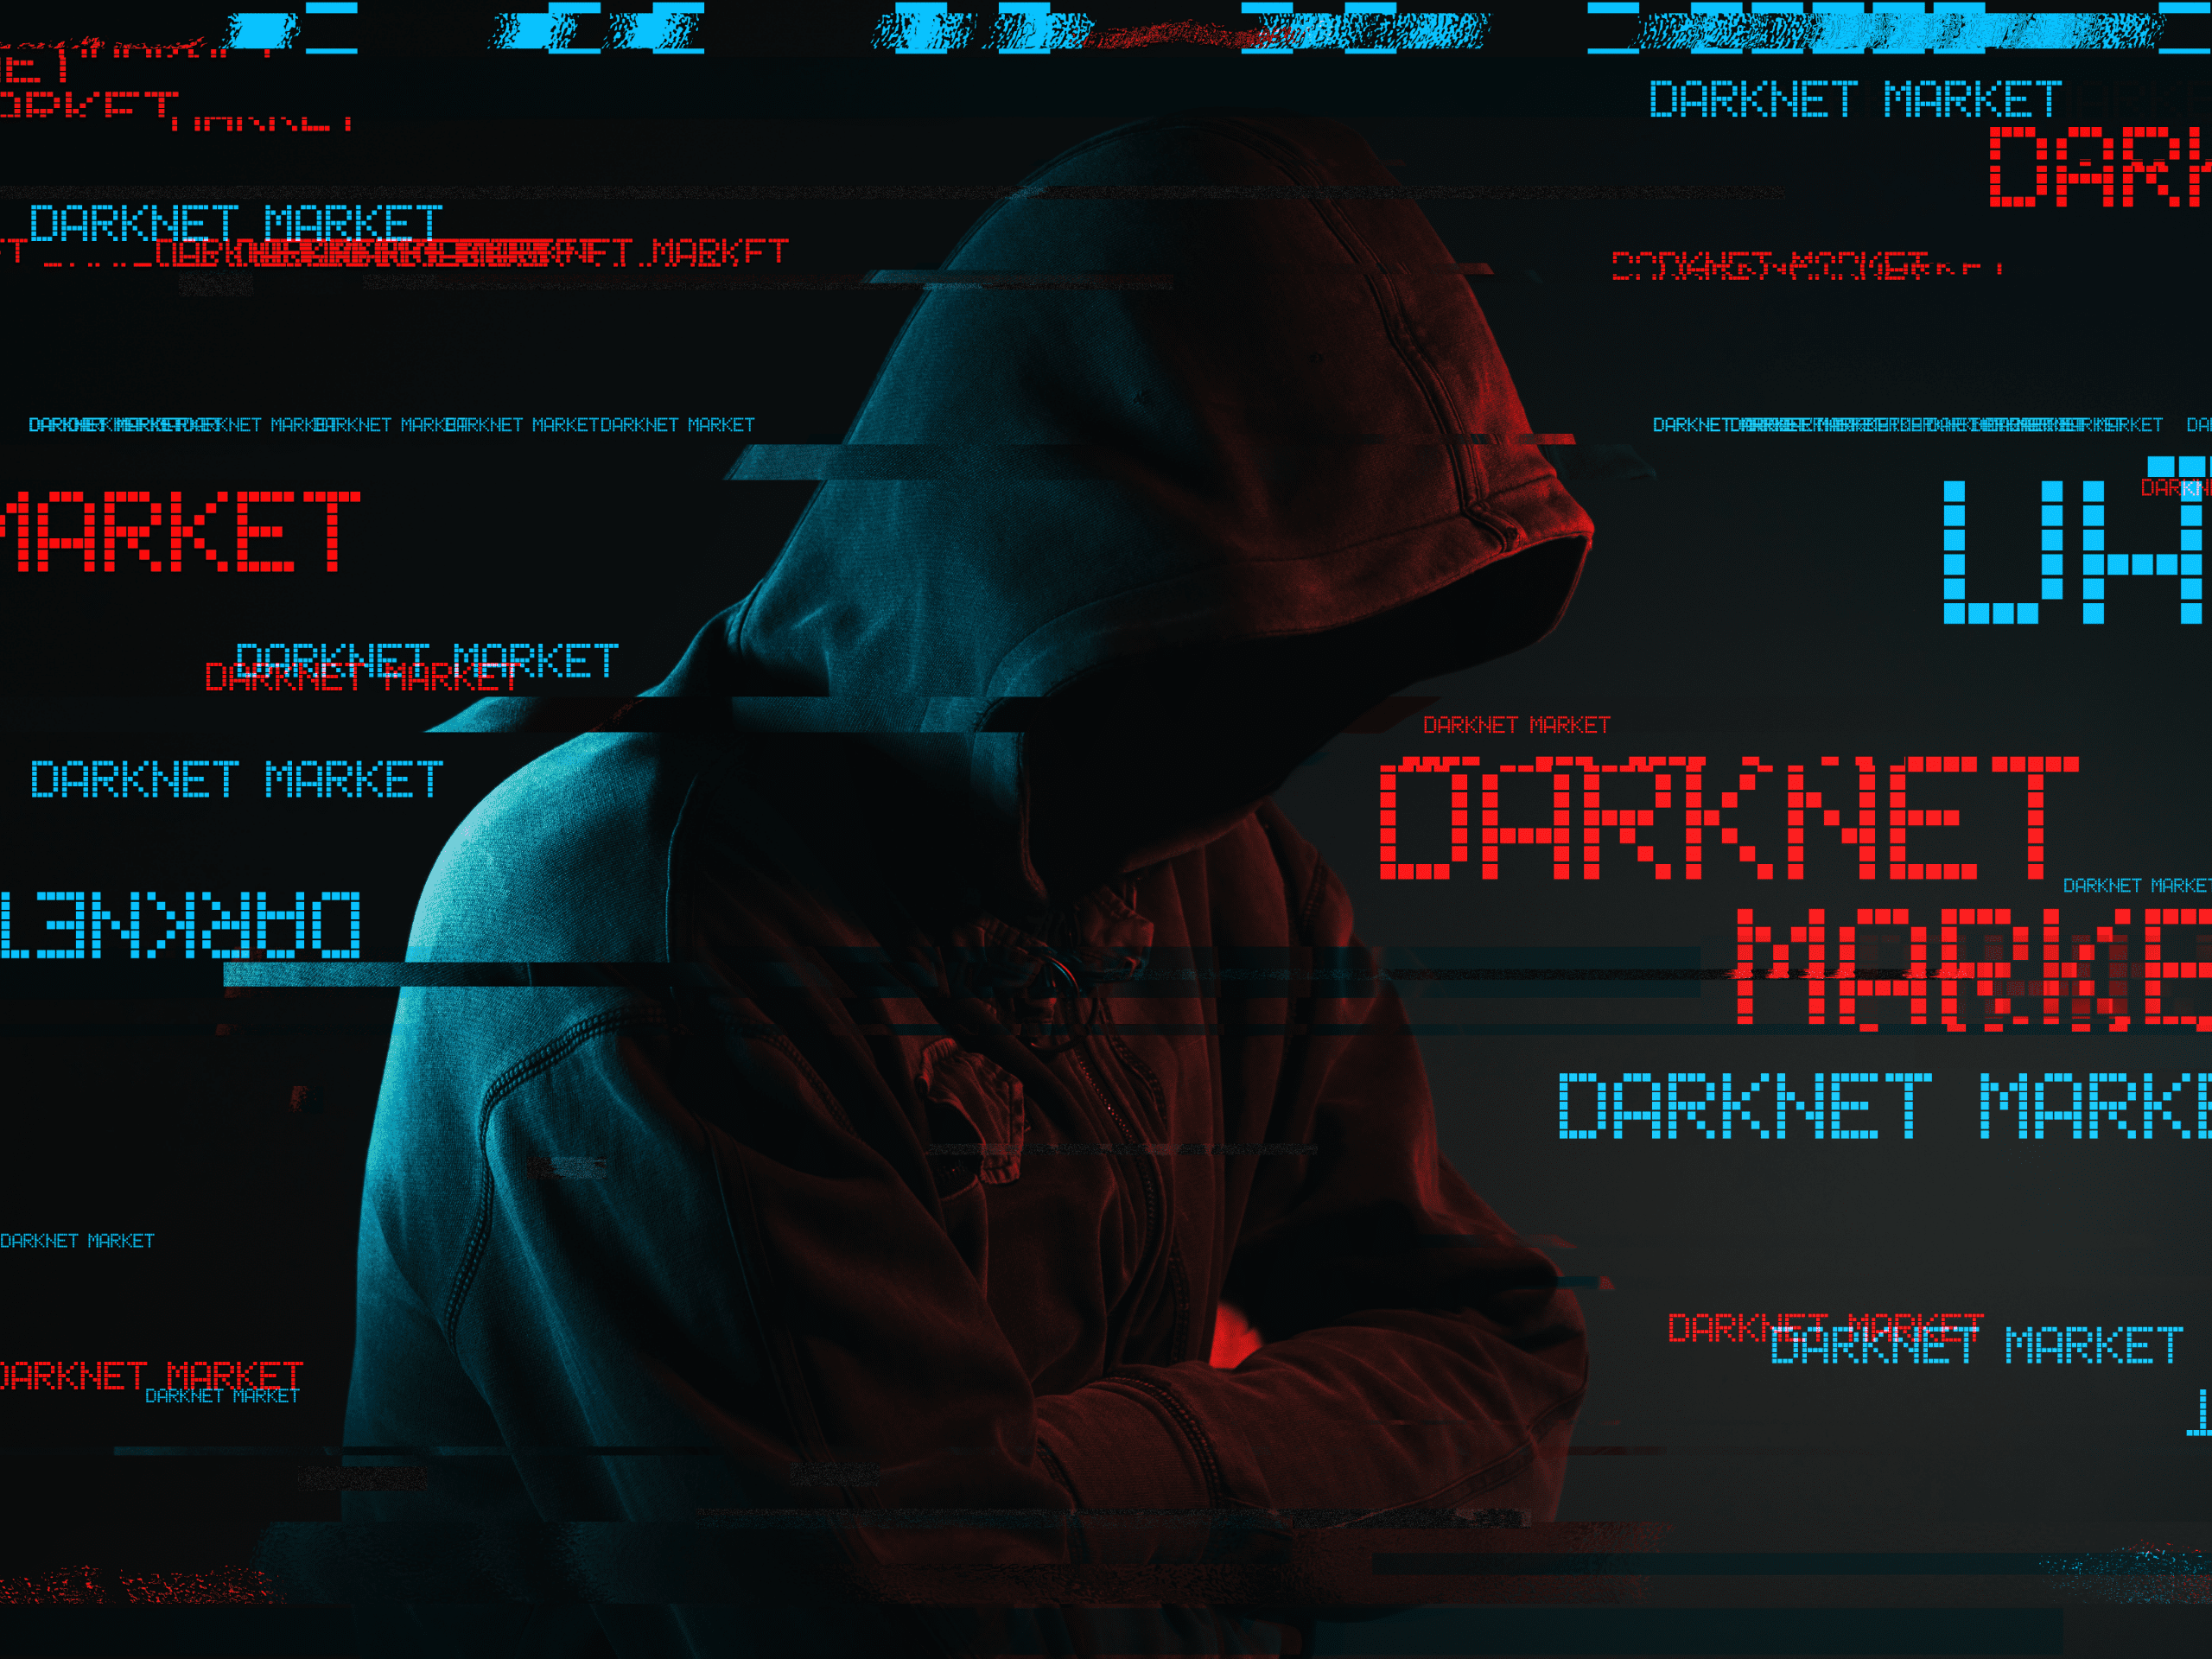 Darknet guide hyrda оперативная информация о сбыте наркотиков